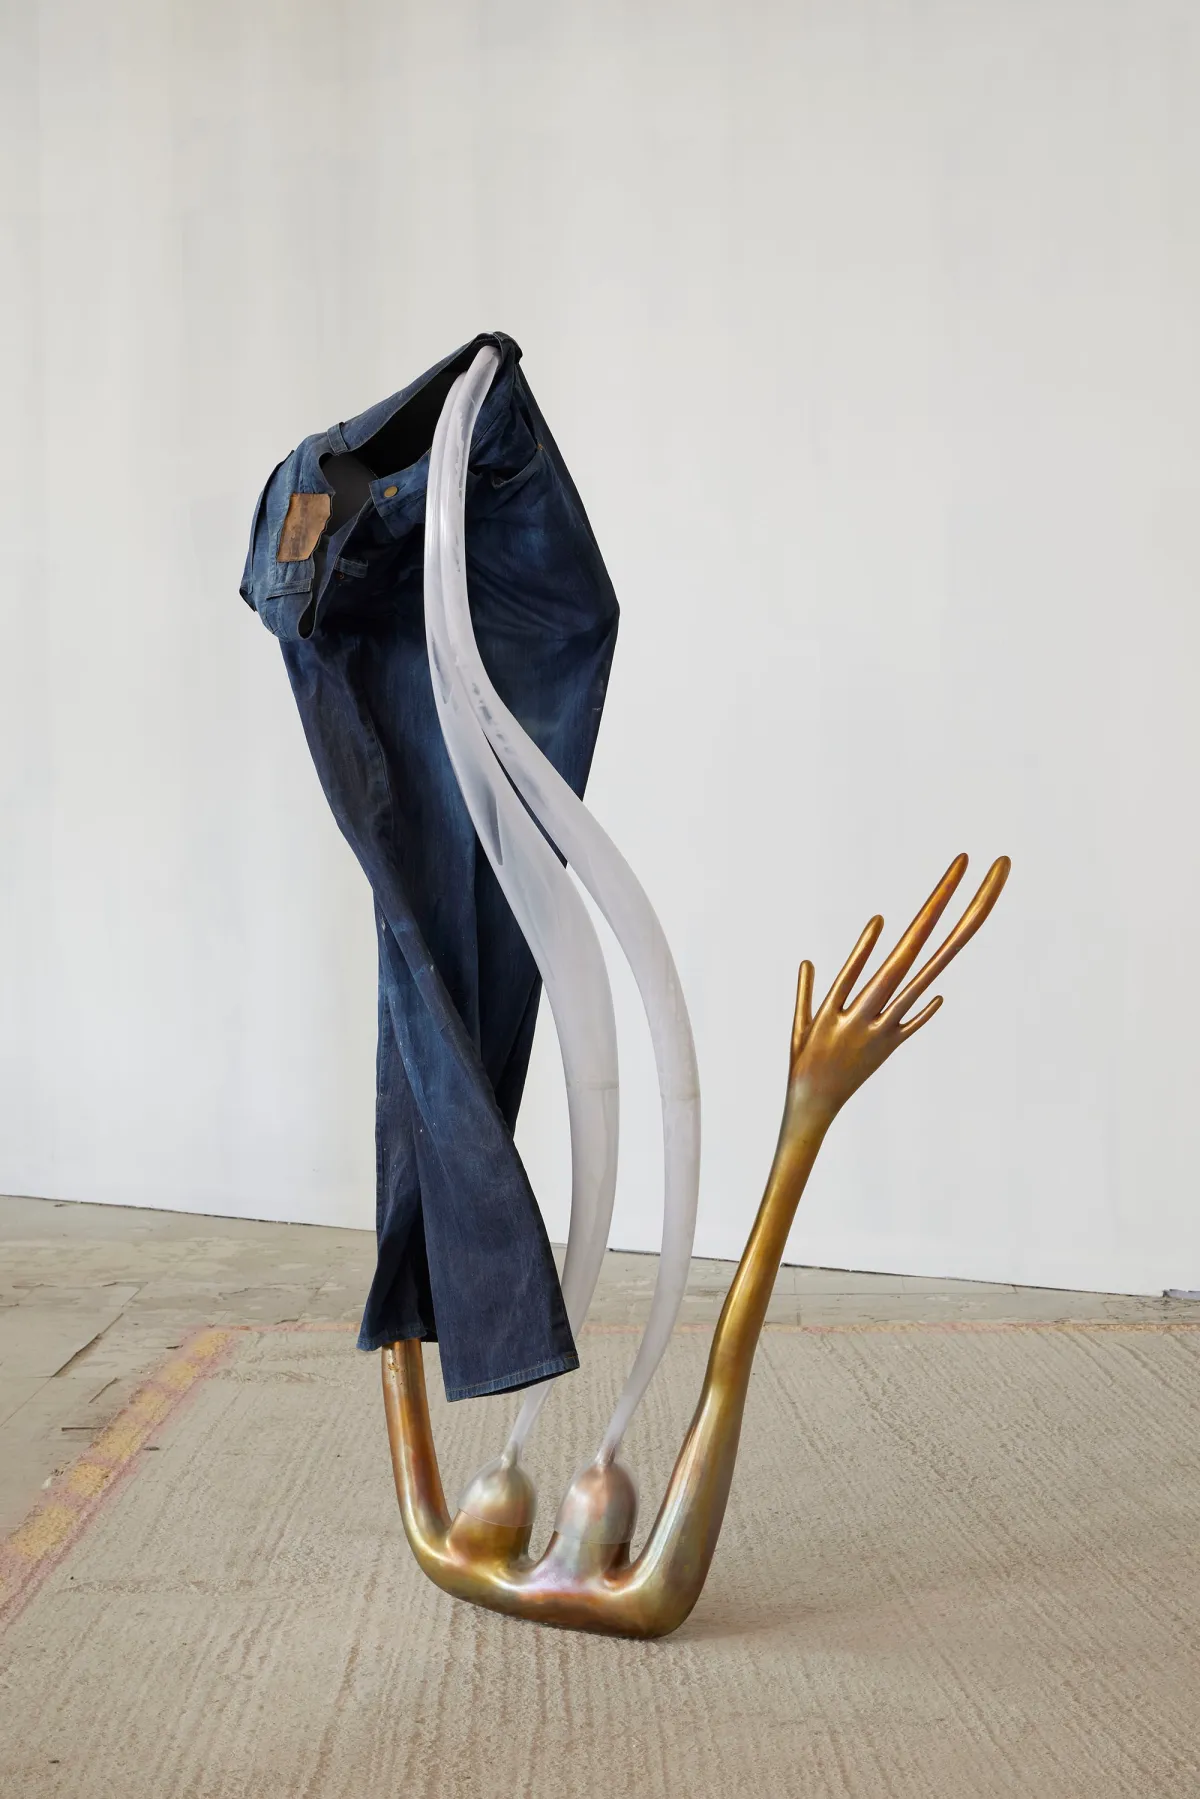 Art sculpture resembling a human limb, draped by a pair of blue jeans.